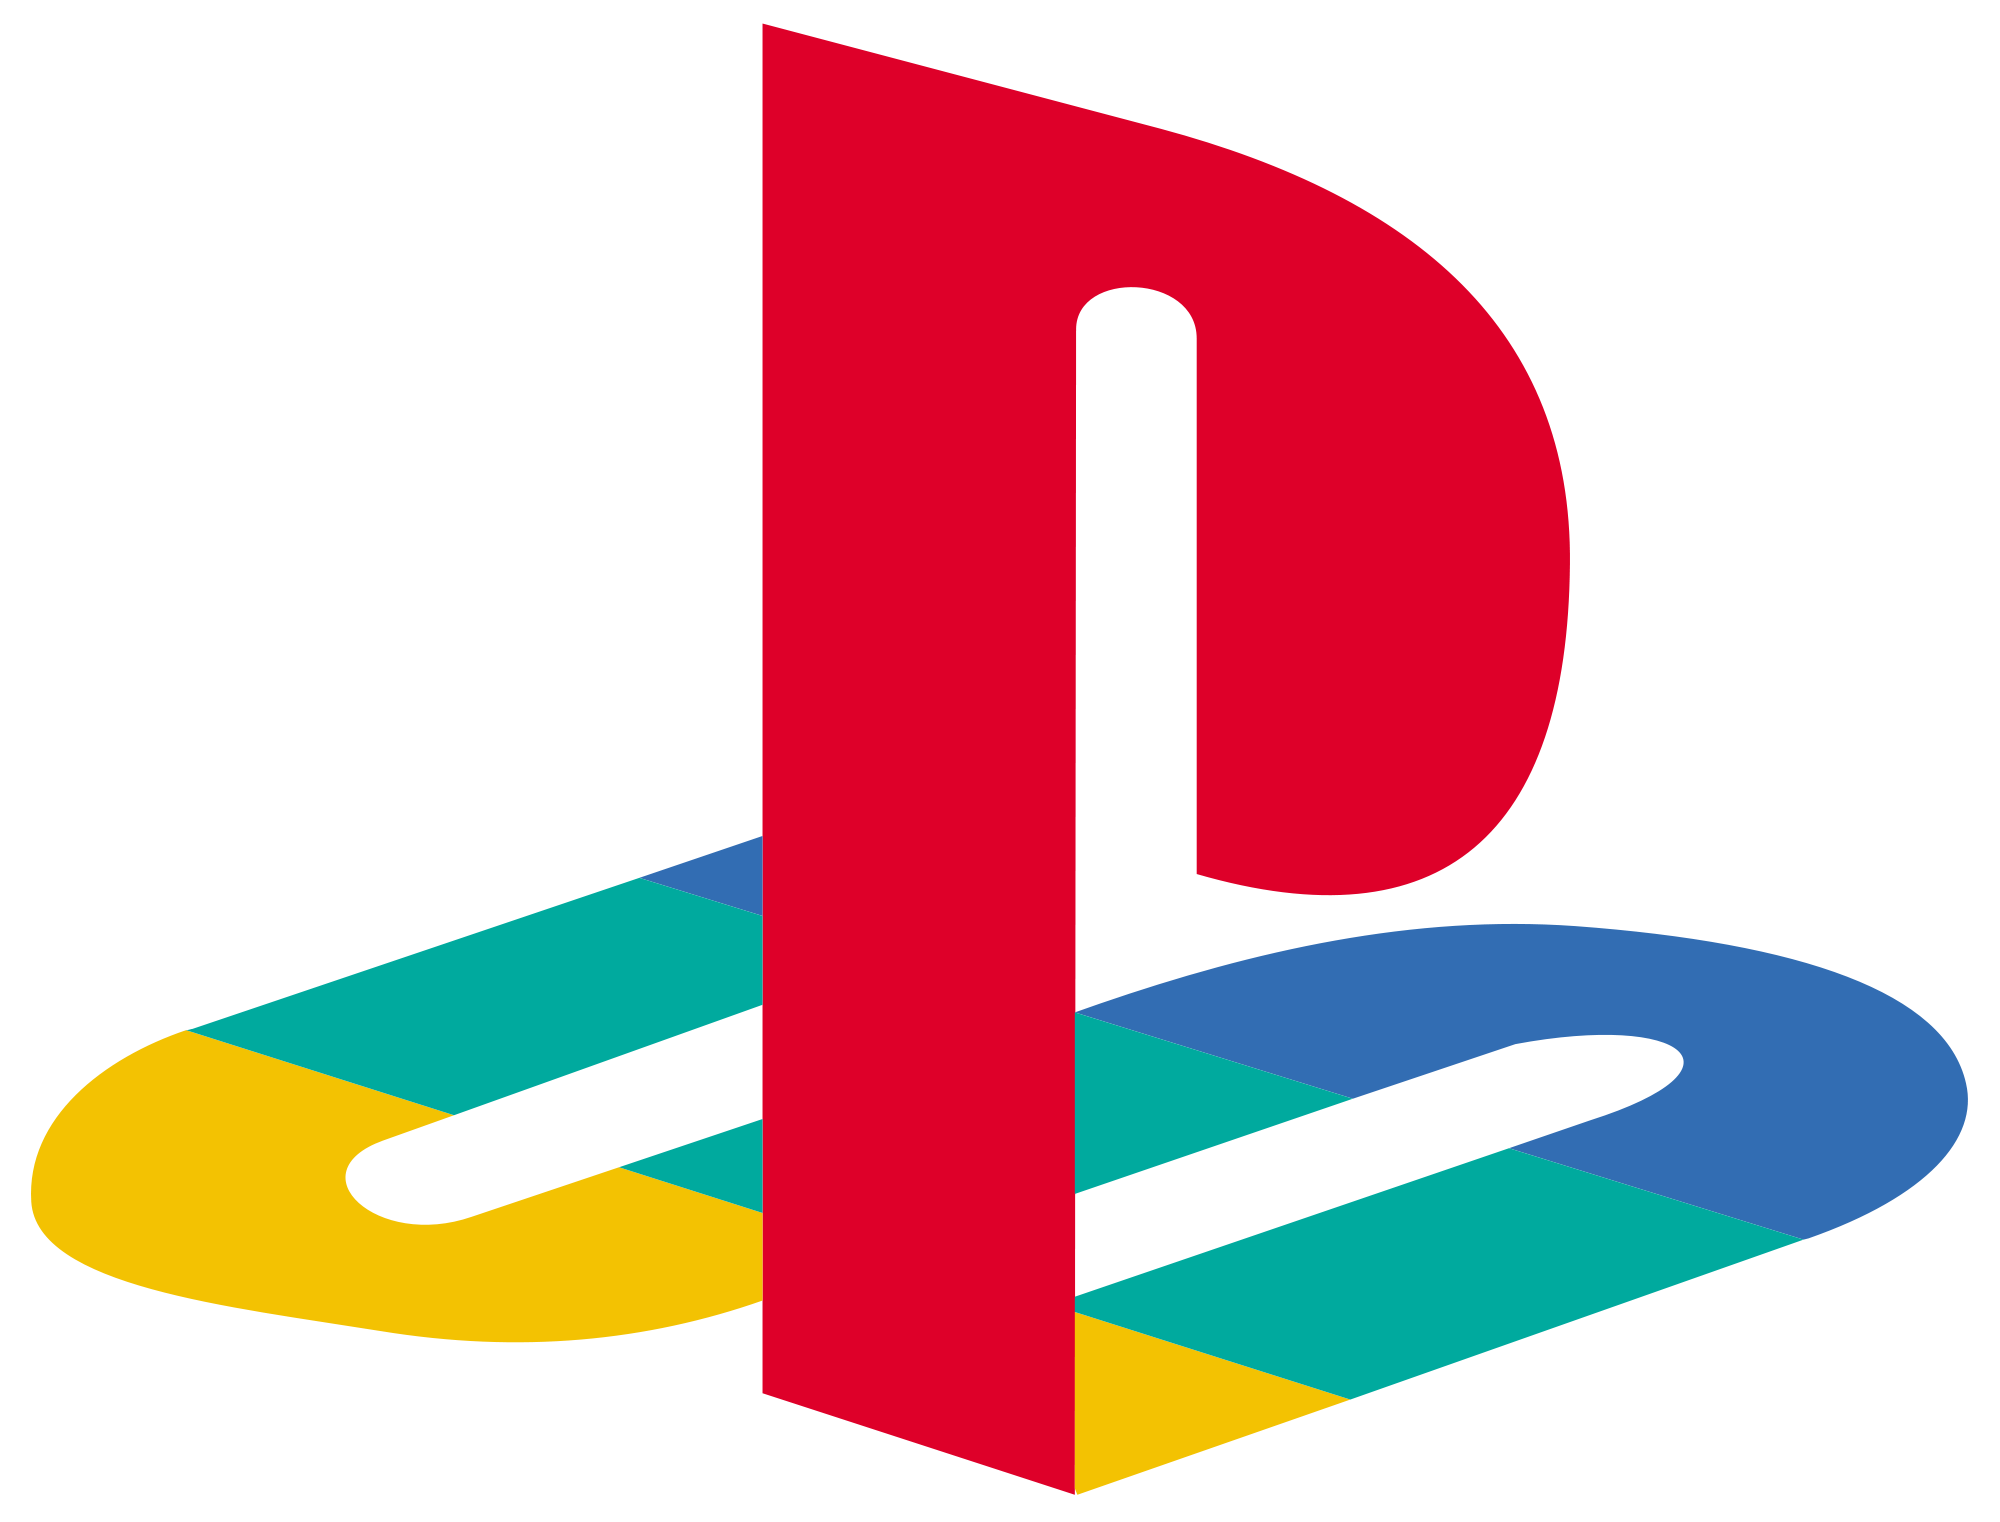 Play Station logo